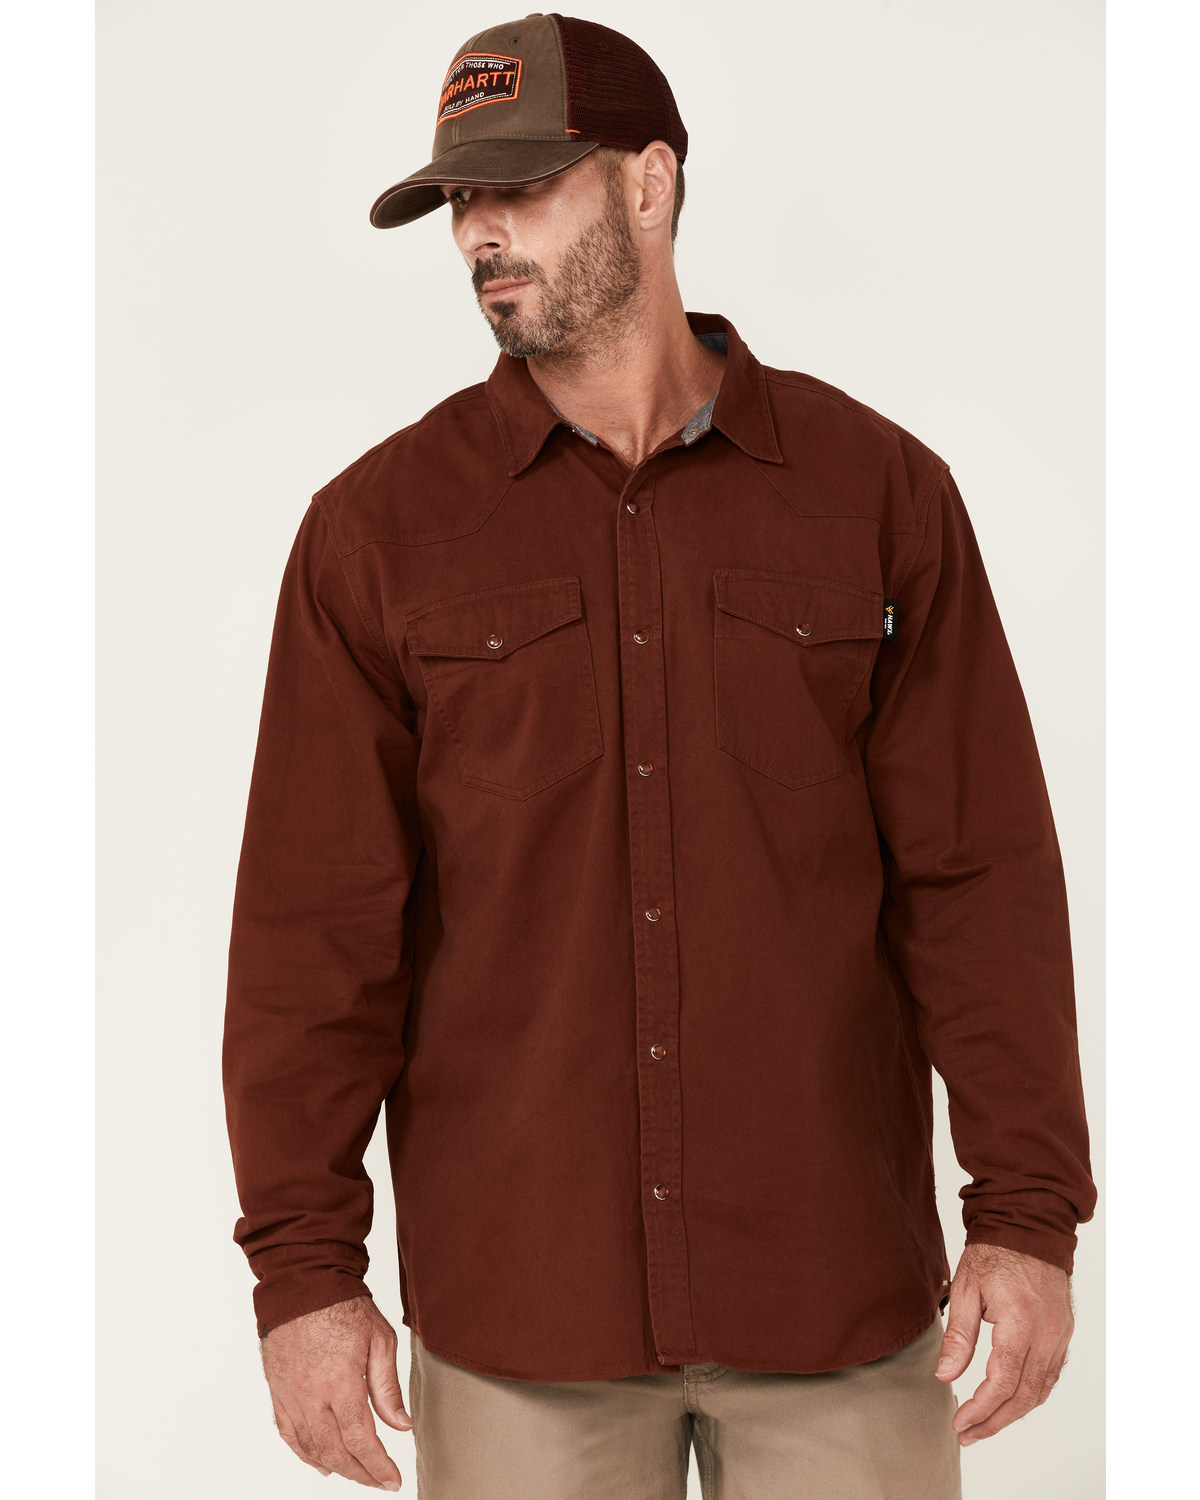 Hawx Men's Solid Mahogany Twill Snap Long Sleeve Work Shirt - Big